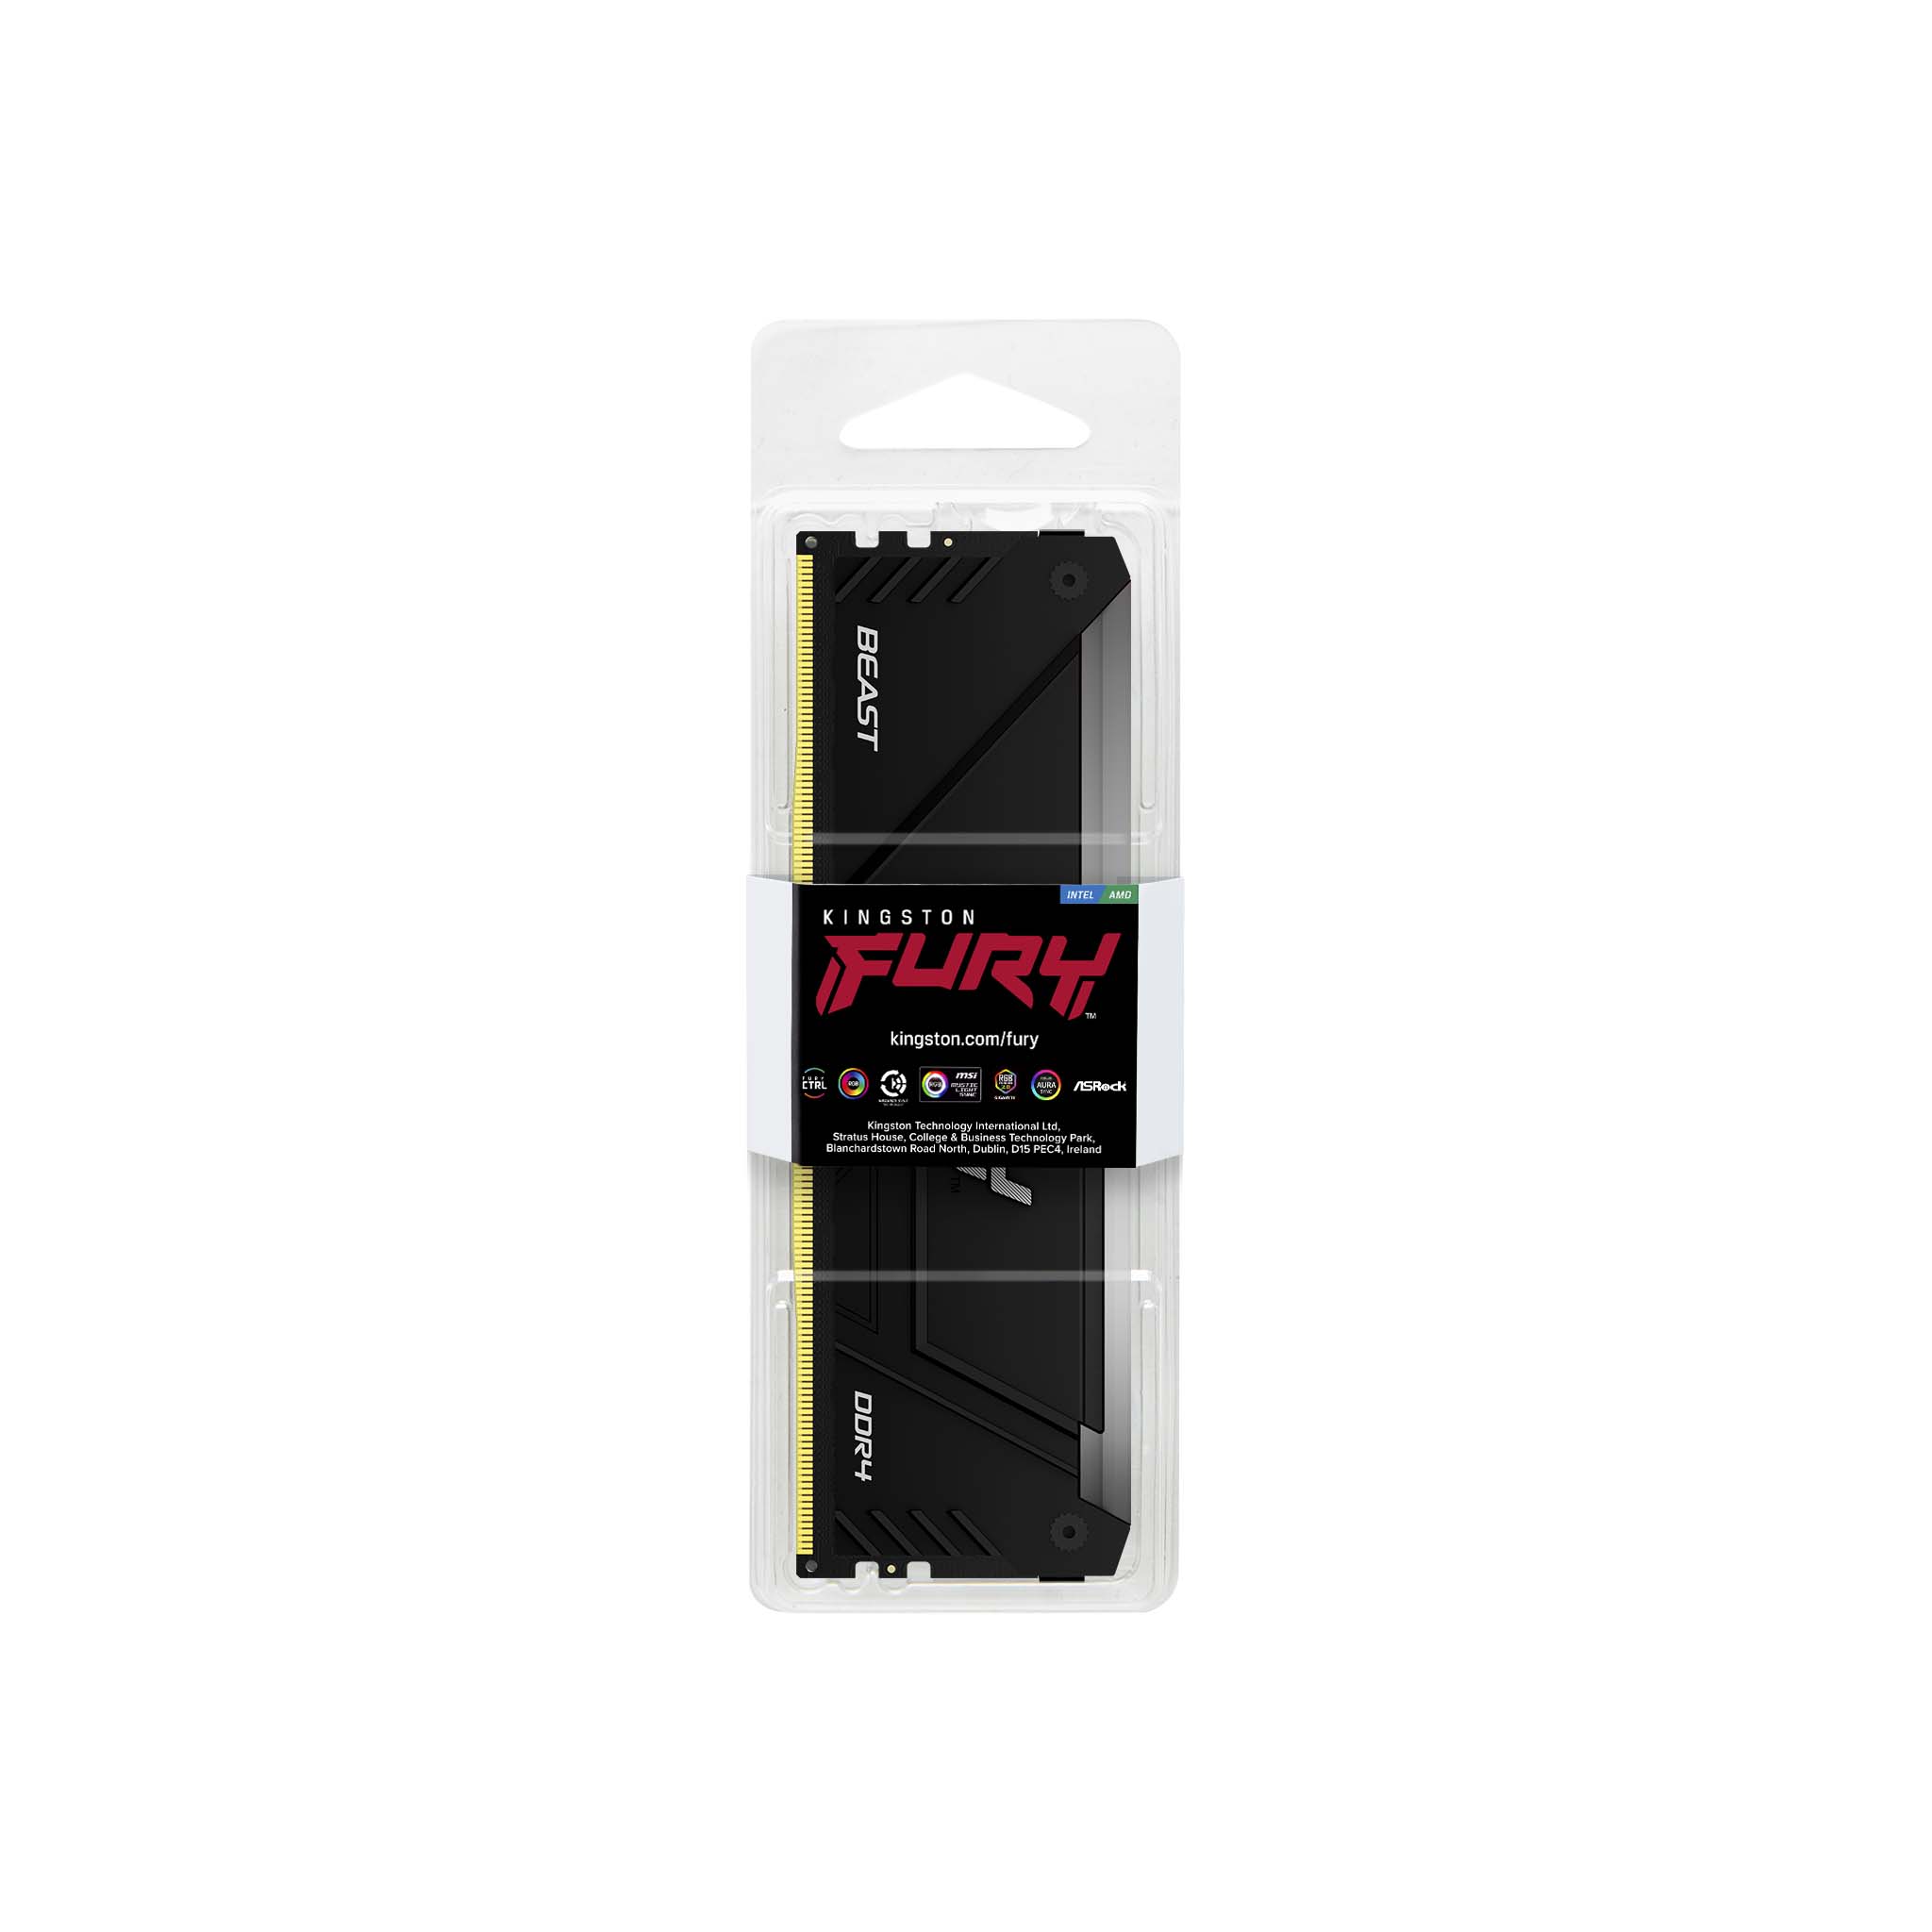 Kingston FURY Beast 8GB PC4-25600 288-pin DDR4 SDRAM UDIMM